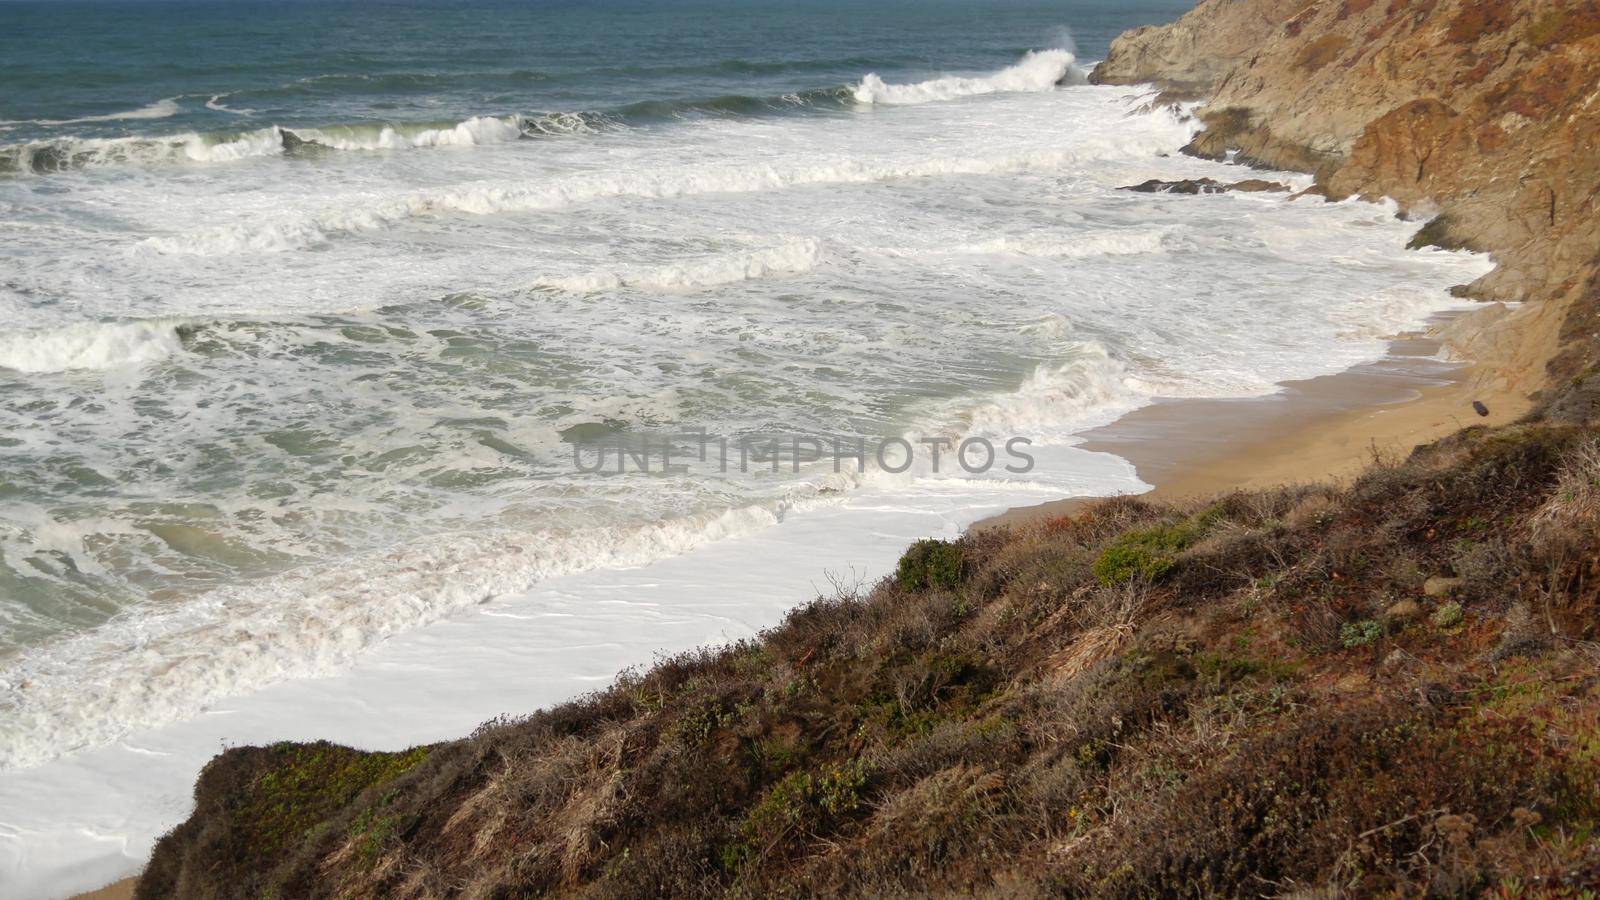 Ocean waves and rocks, Monterey, Northern California, USA. 17-mile drive near Big Sur, seaside golf tourist resort on Pacific Coast Highway. Splashing water and sea breeze of Pebble beach. Road trip.